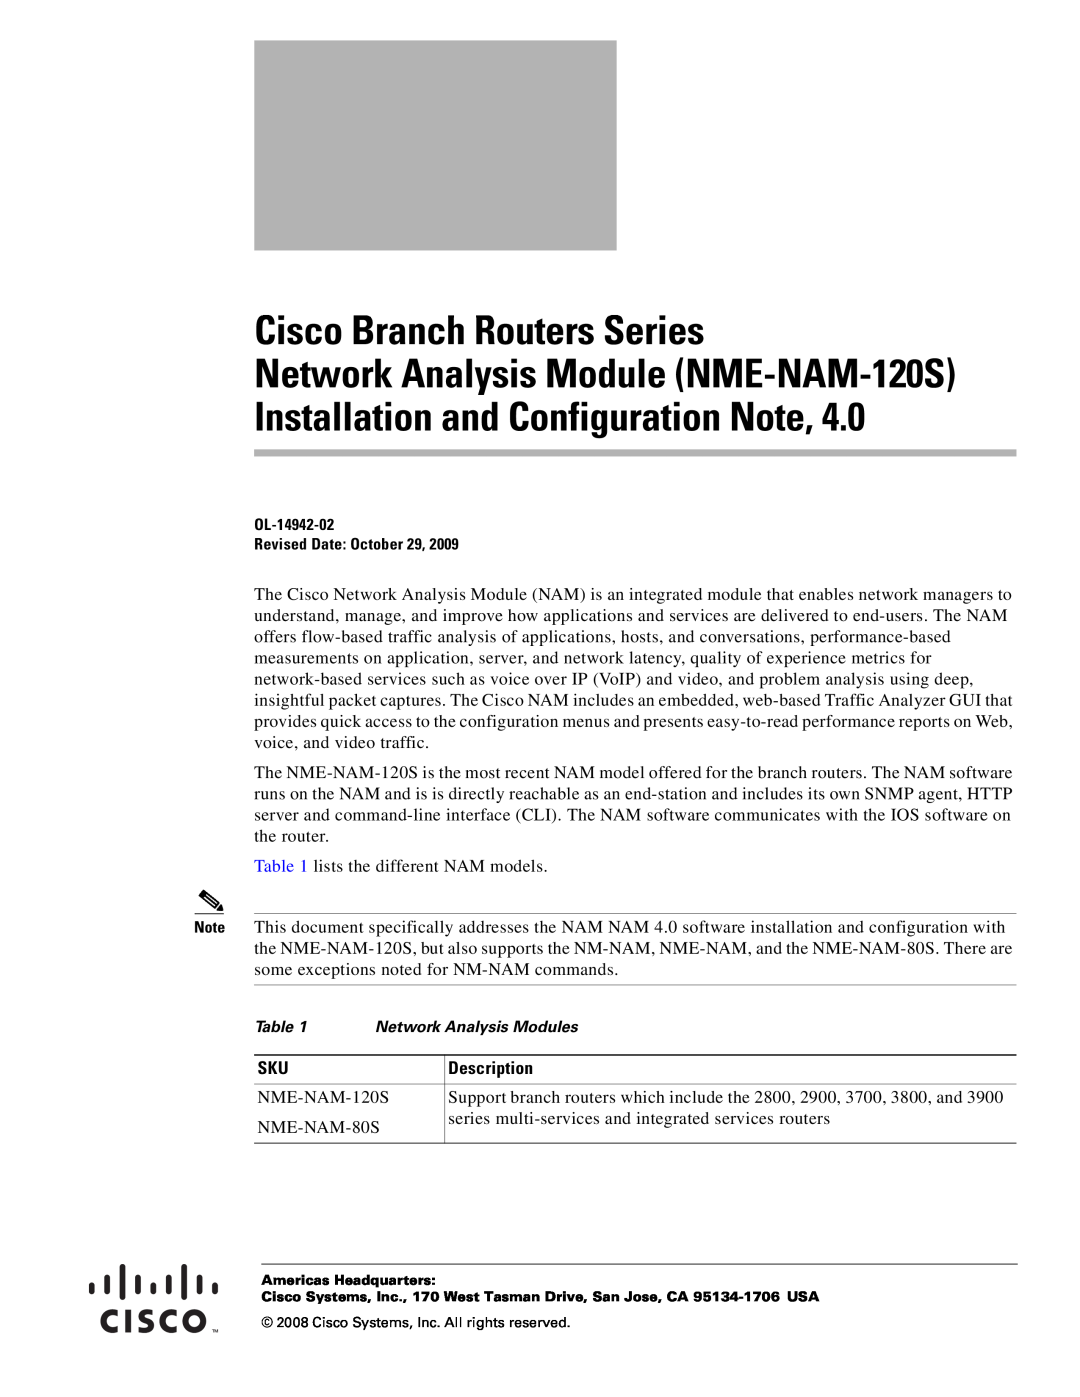 Cisco Systems SMNMADPTR manual Description, Cisco Branch Routers Series Network Analysis Module NME-NAM-120S 